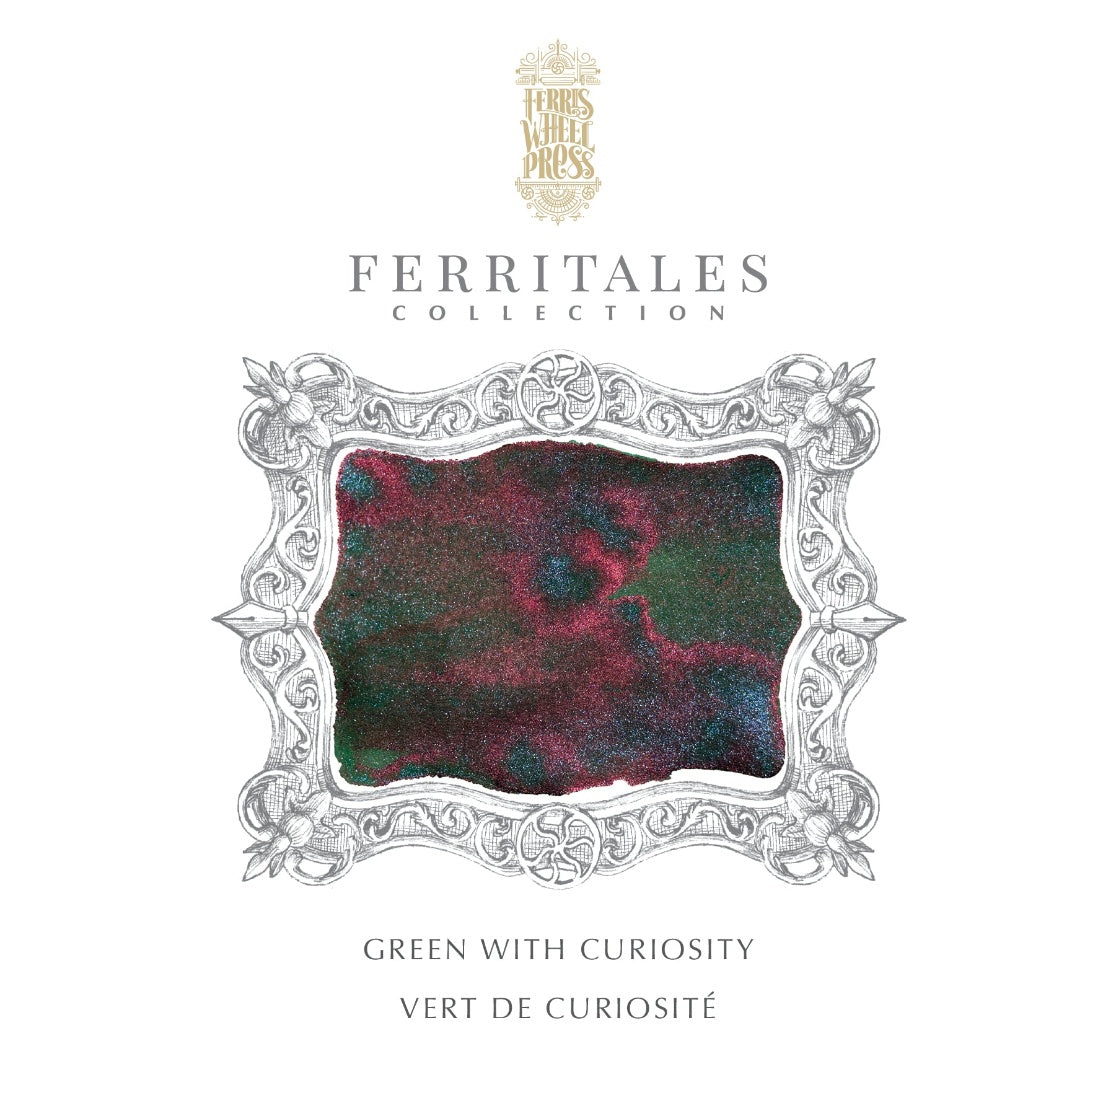 FERRIS WHEEL PRESS Fountain Pen Ink 20ml Ferritales Green With Curiosity Default Title